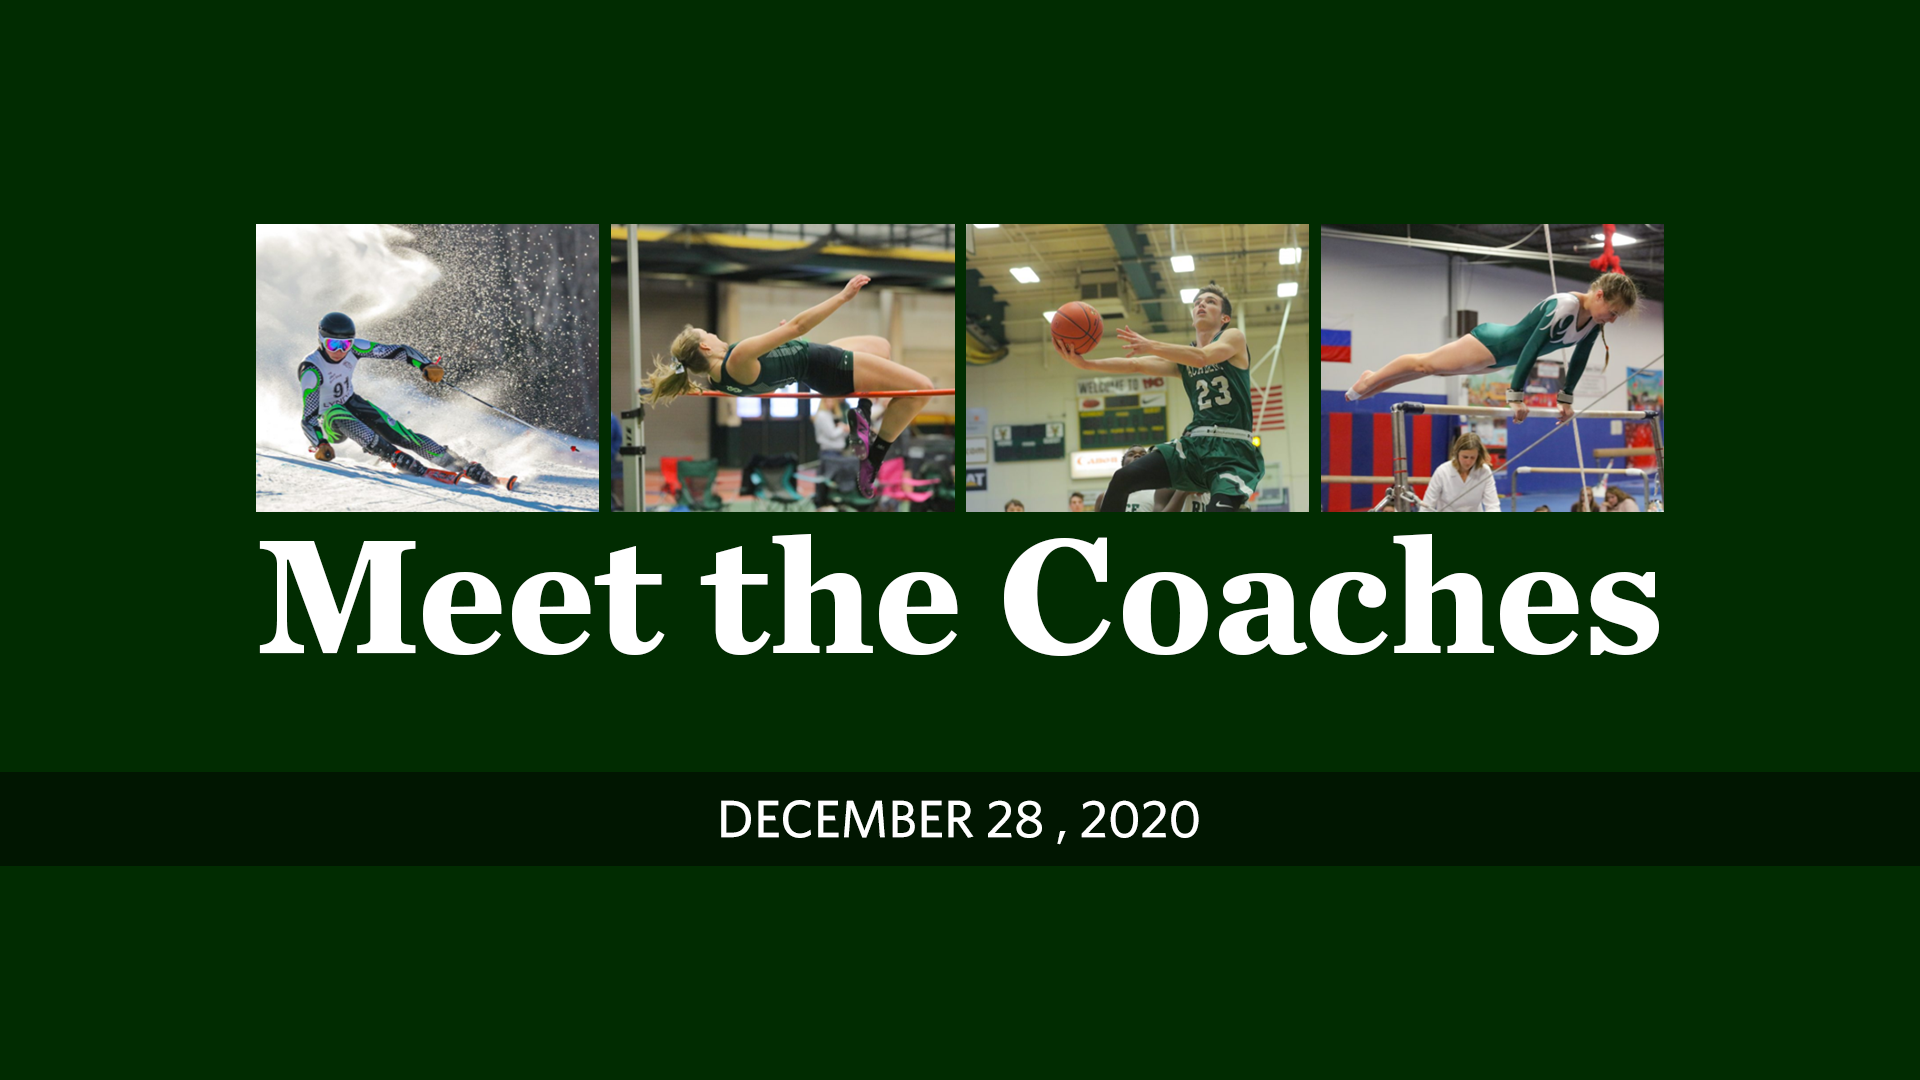 Meet the Coaches video slide